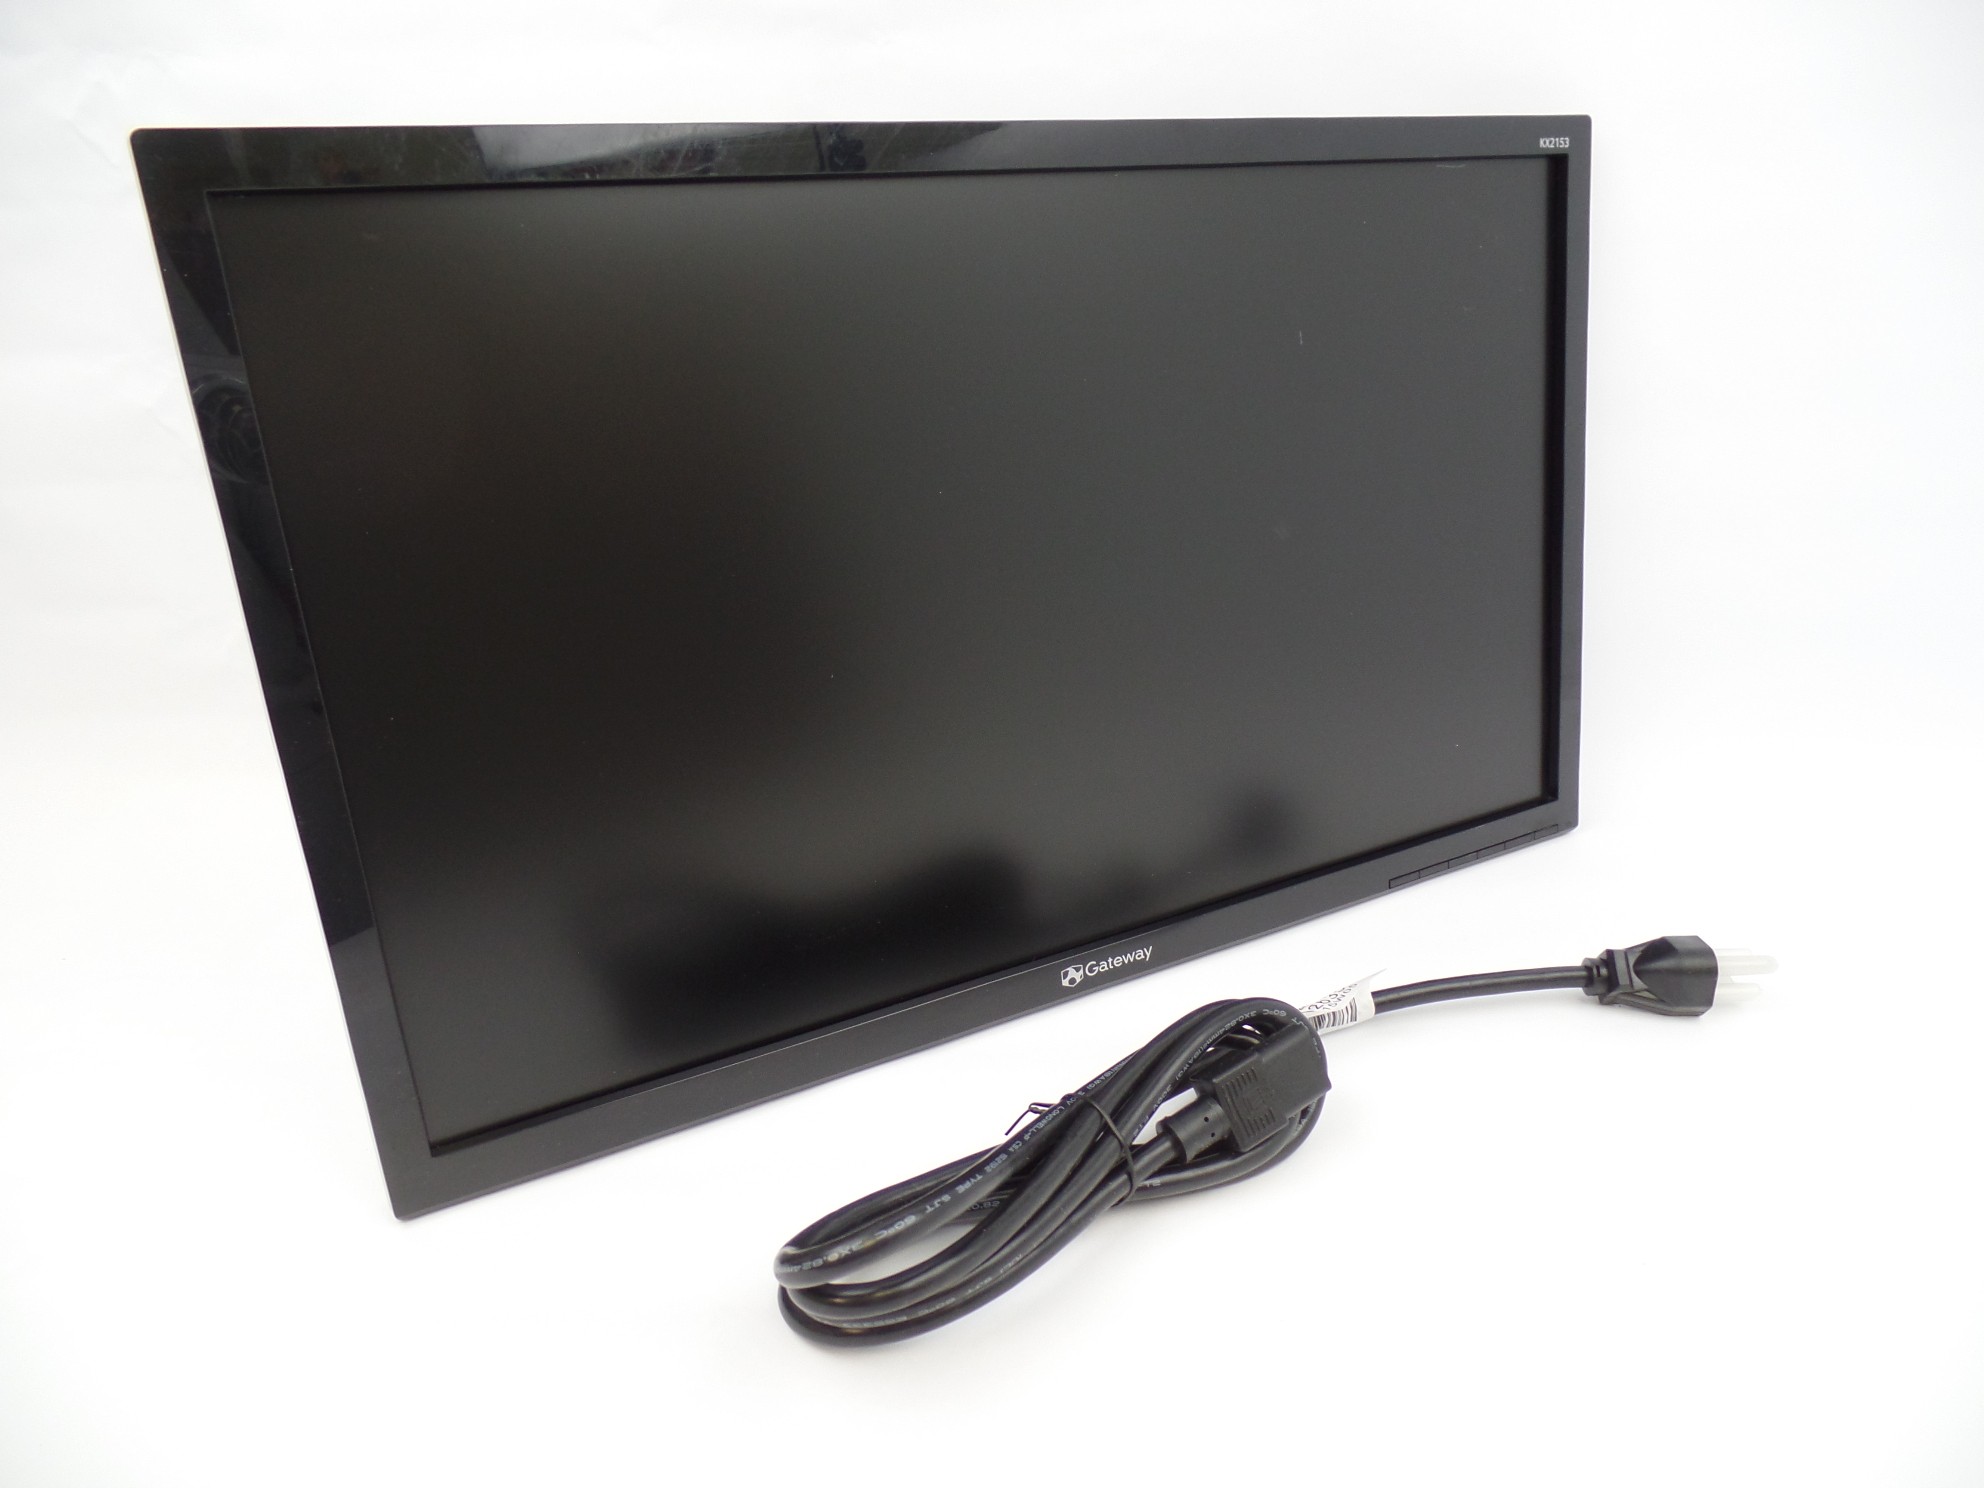 Gateway KX2153 21.5" FHD LED Monitor - No stand